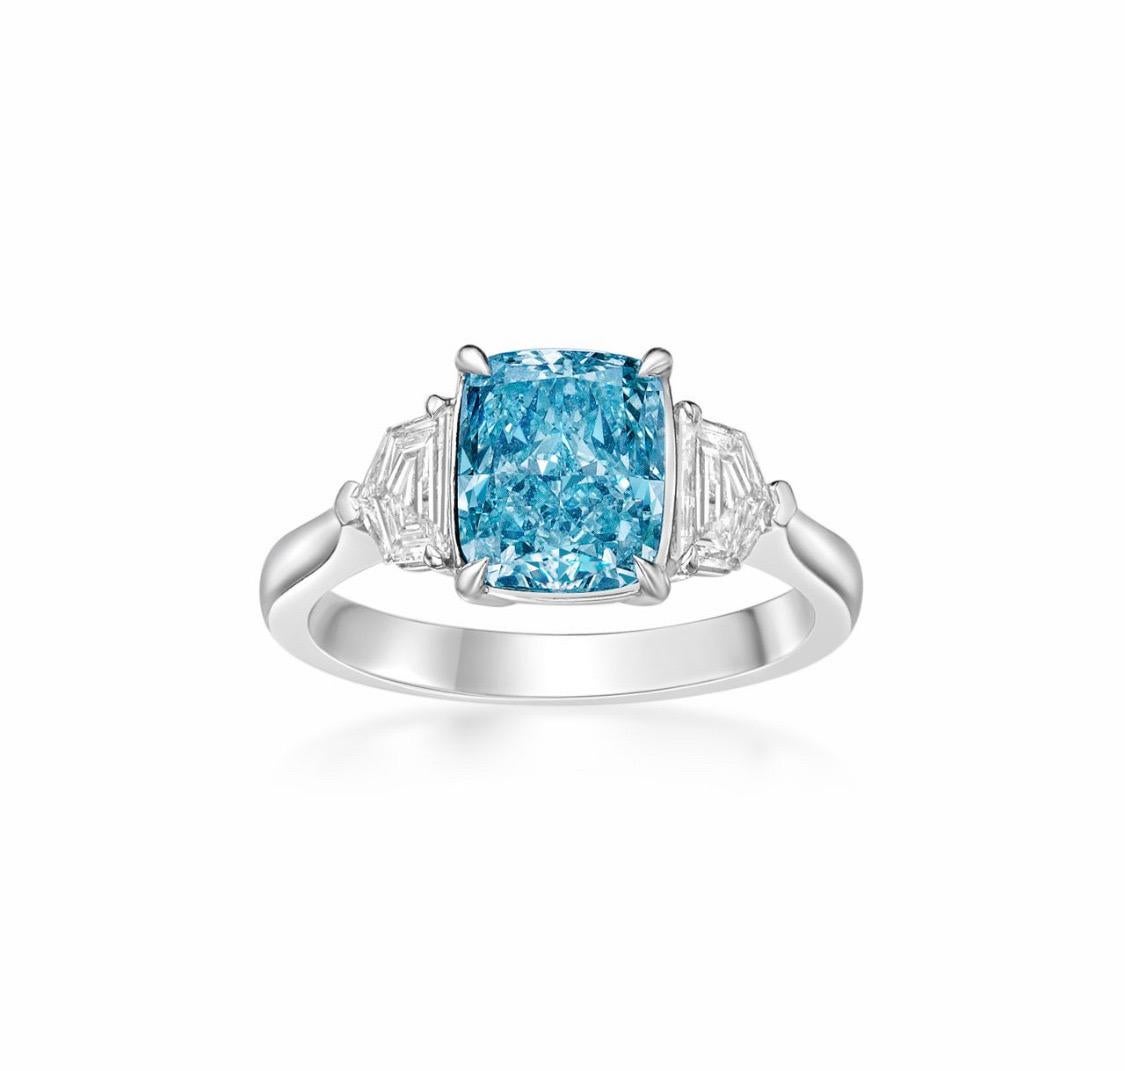 Cushion Cut Emilio Jewelry Gia Certified 2.73 Carat Fancy Intense Blush Green Diamond Ring  For Sale